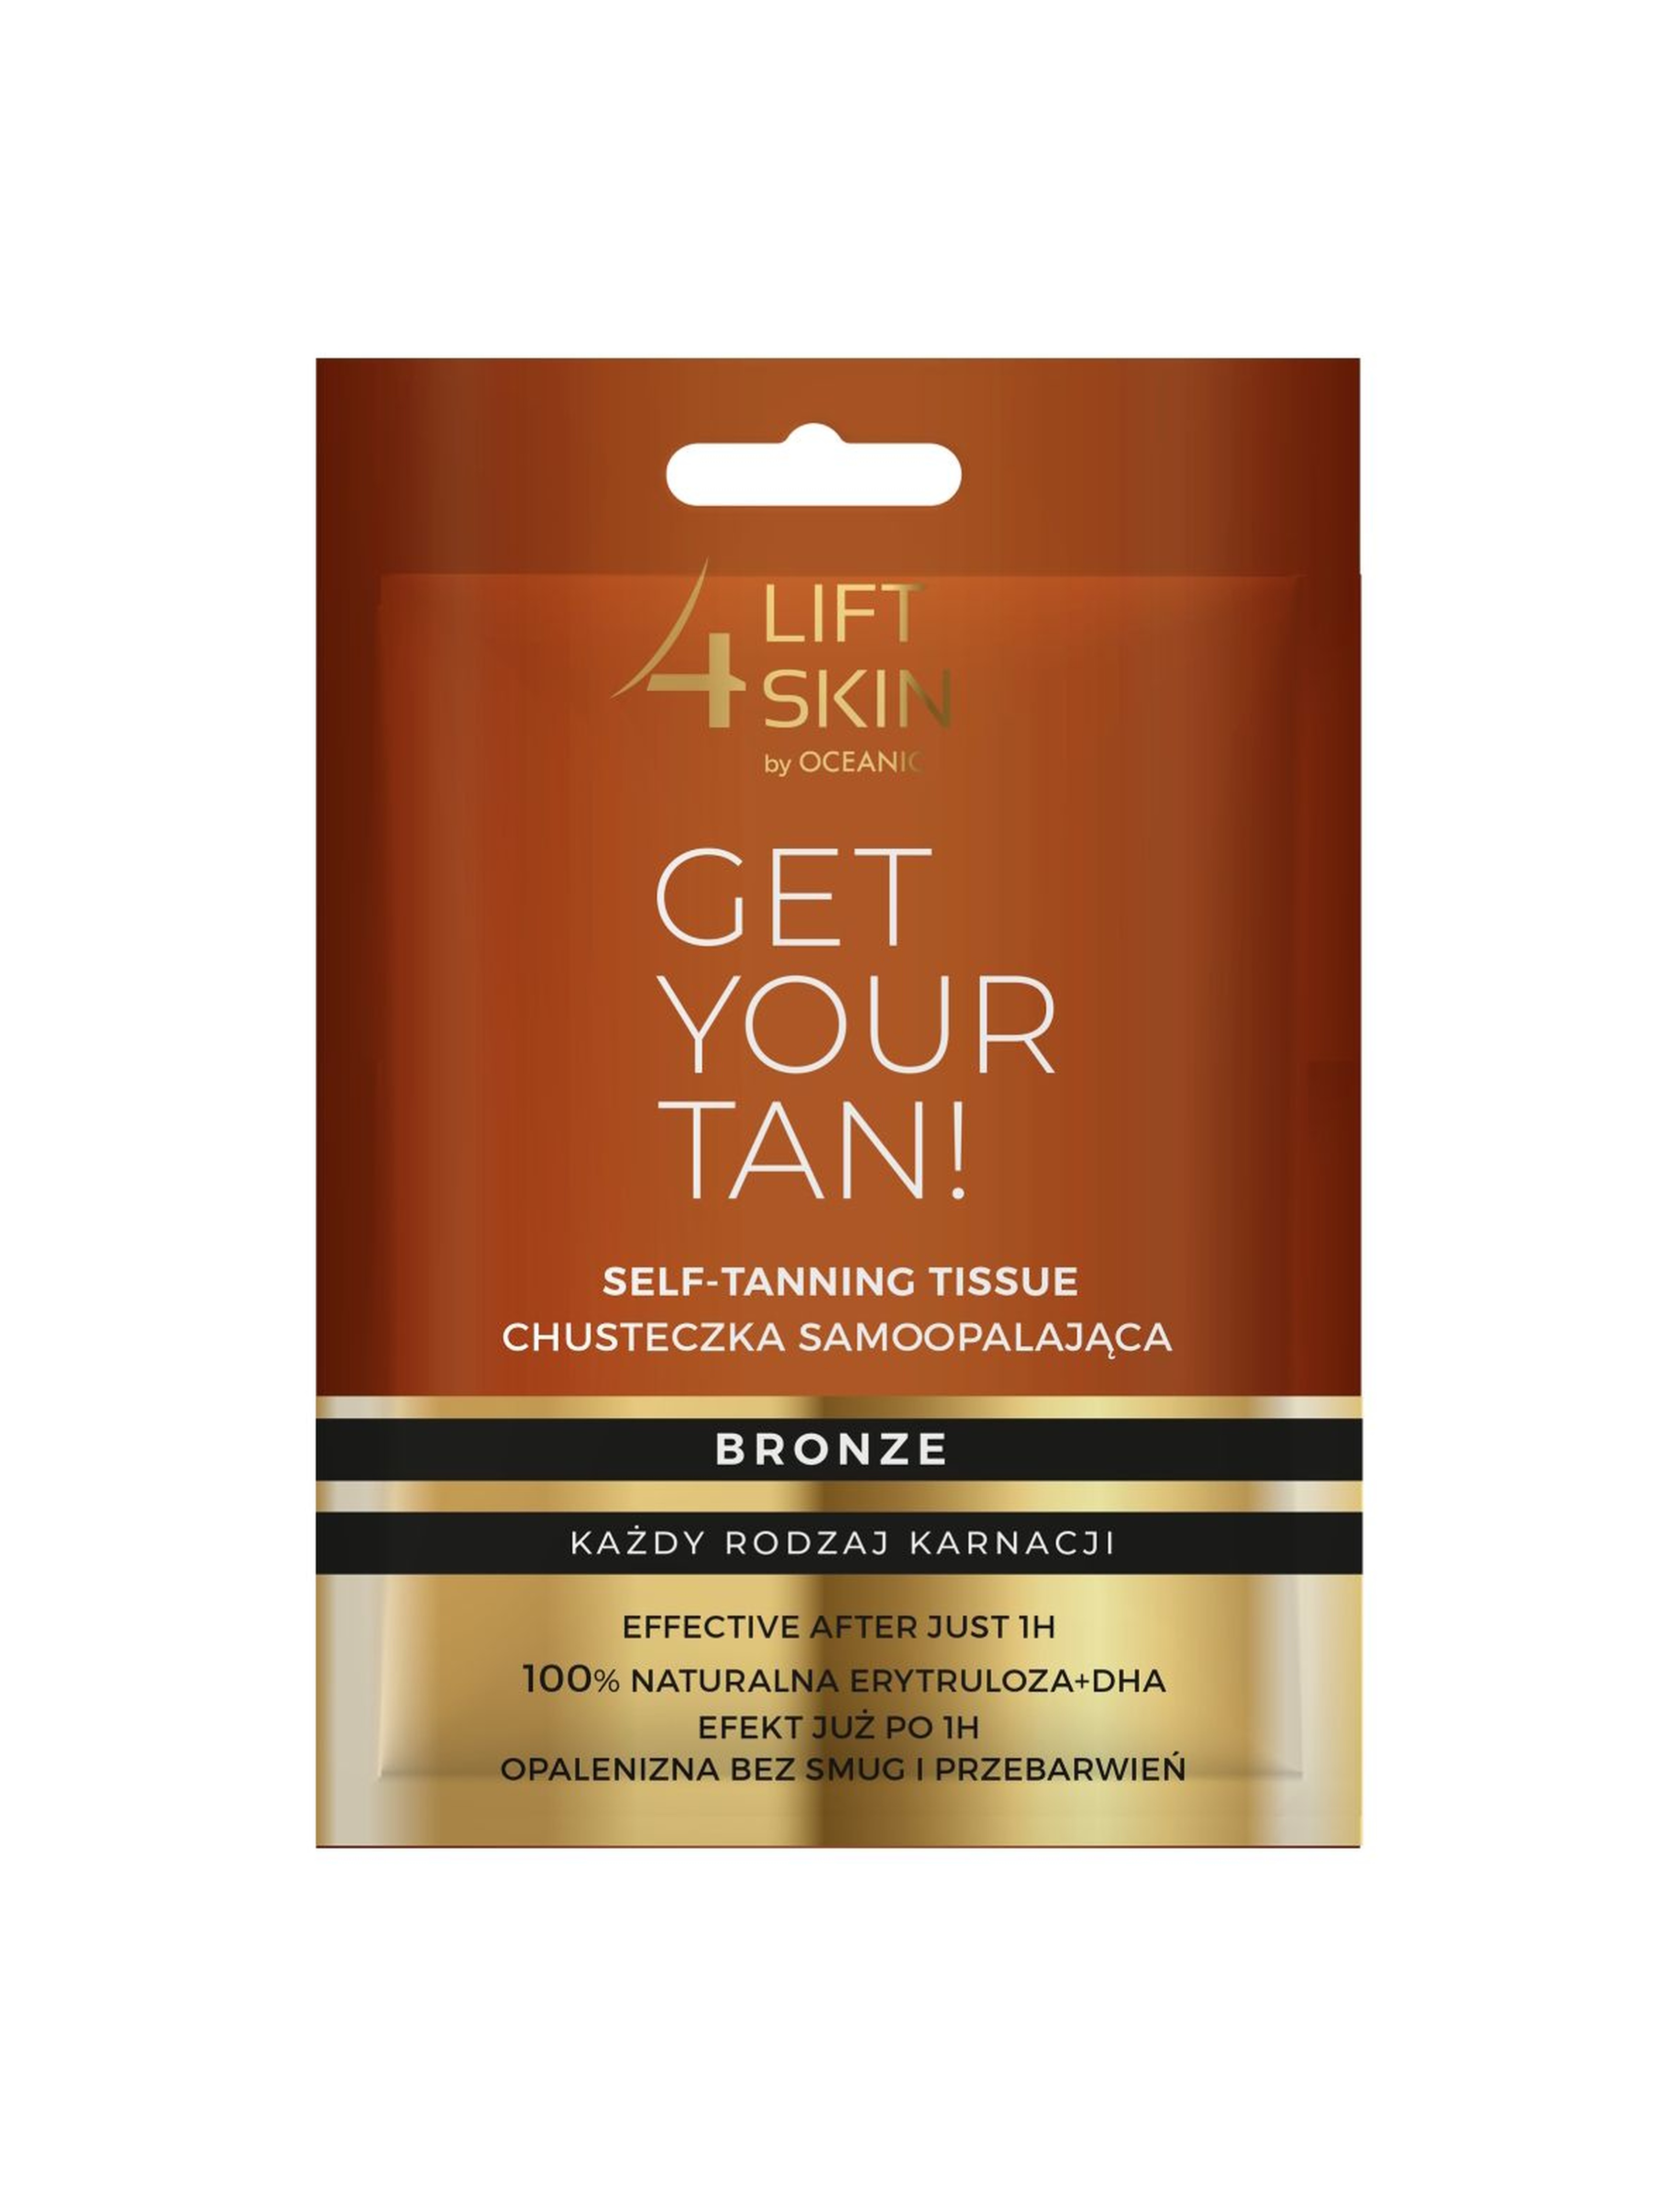 Lift4Skin Get Your Tan! chusteczka samoopalająca 1 szt